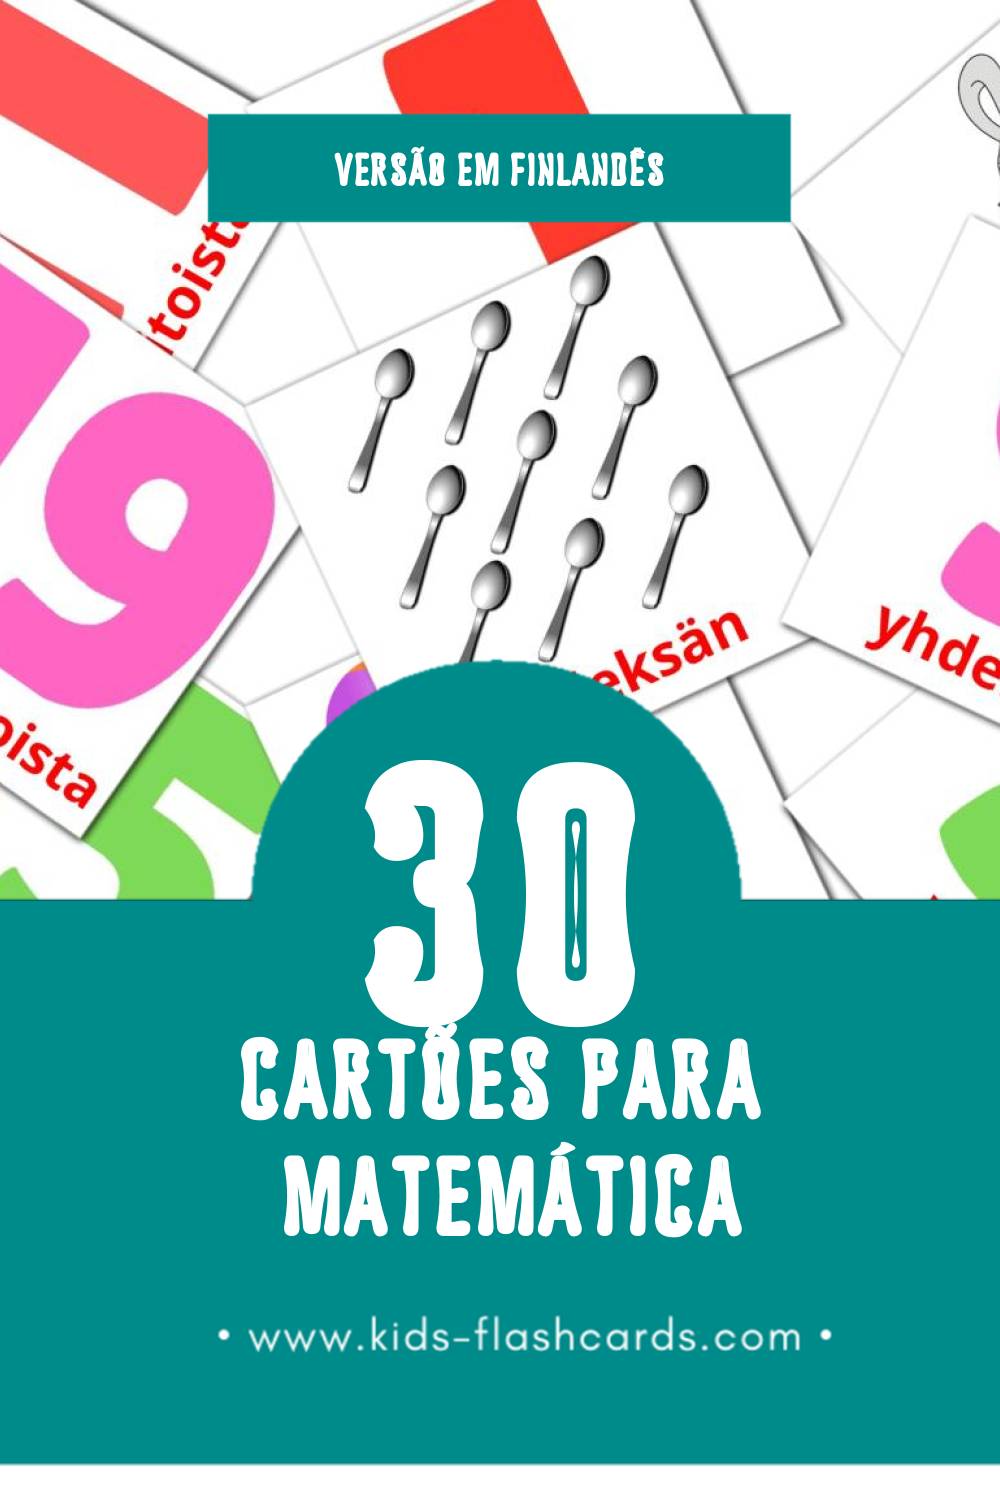 Flashcards de Matematiikka Visuais para Toddlers (30 cartões em Finlandês)